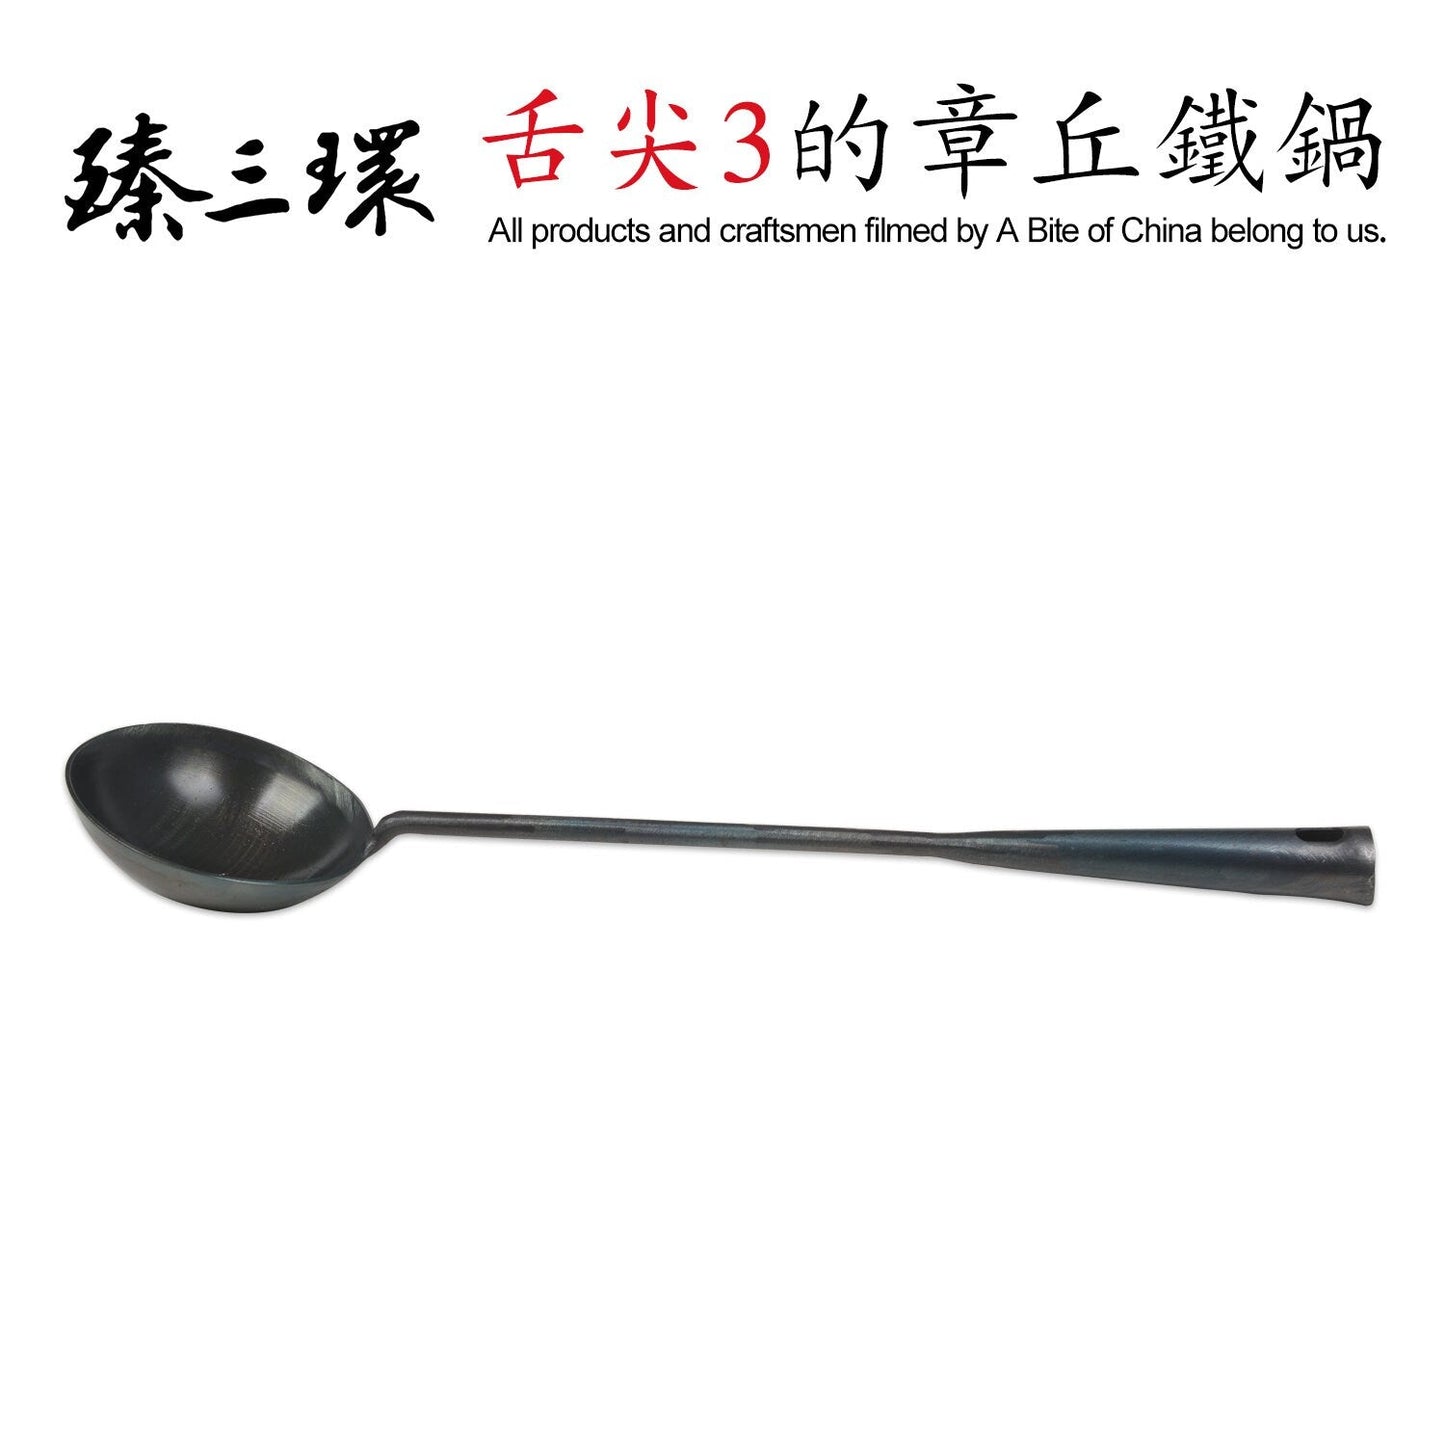 ZhangQiu ZhenSanHuan Forged Iron spatula/turner & soup ladle/spoon long handle cooking utensils